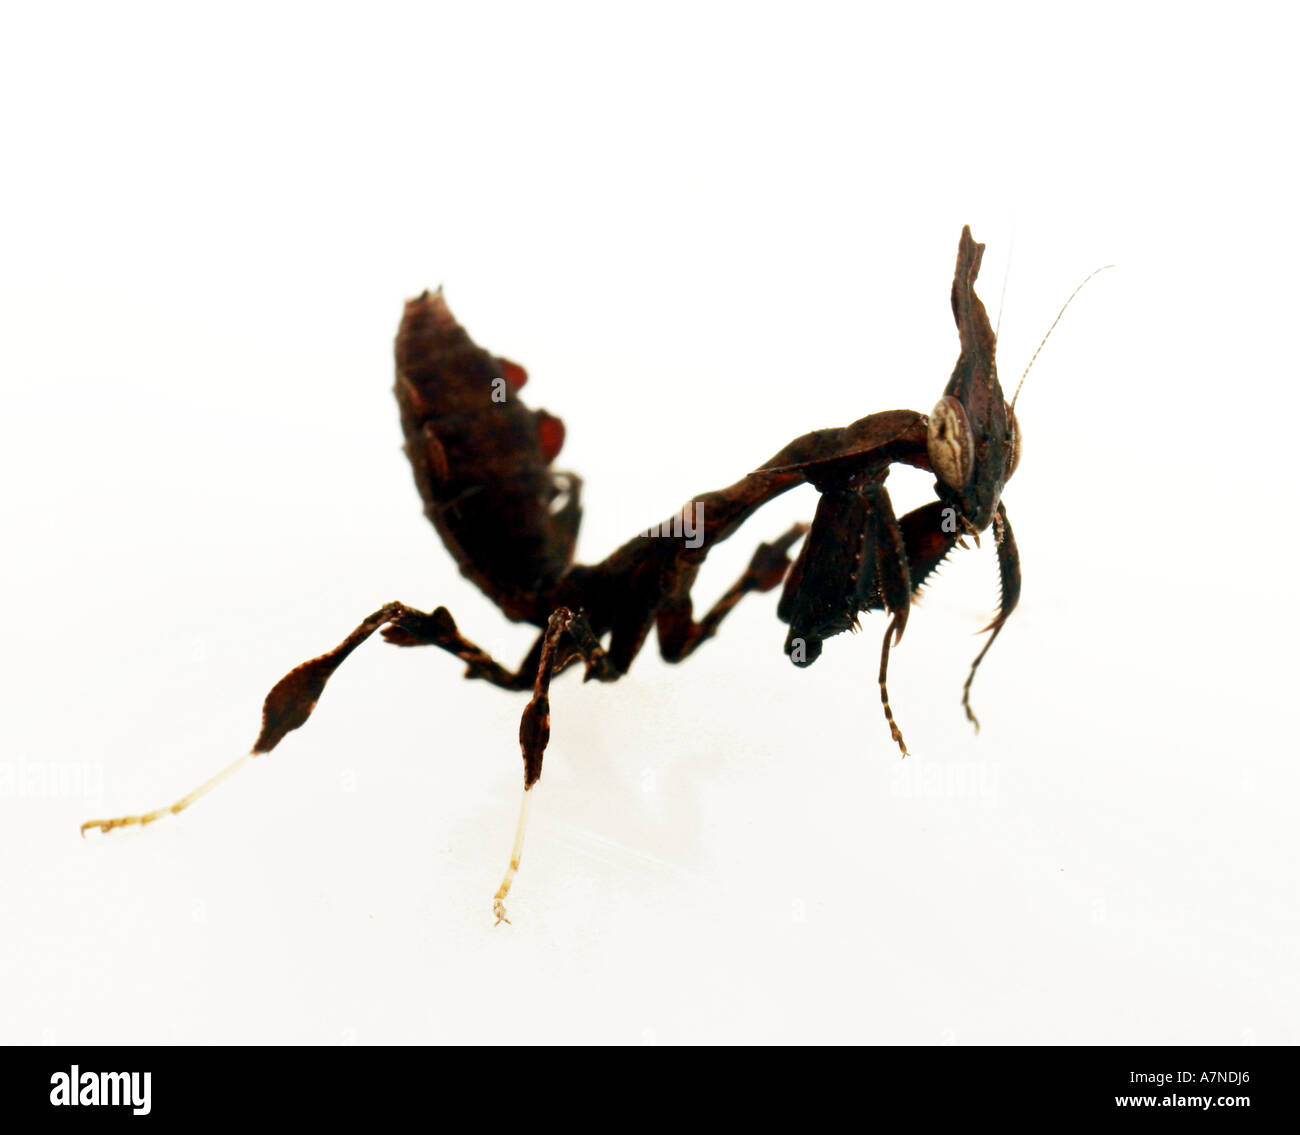 indoors studio nature insect mantis phyllocrania paradoxa close up horizontal Stock Photo